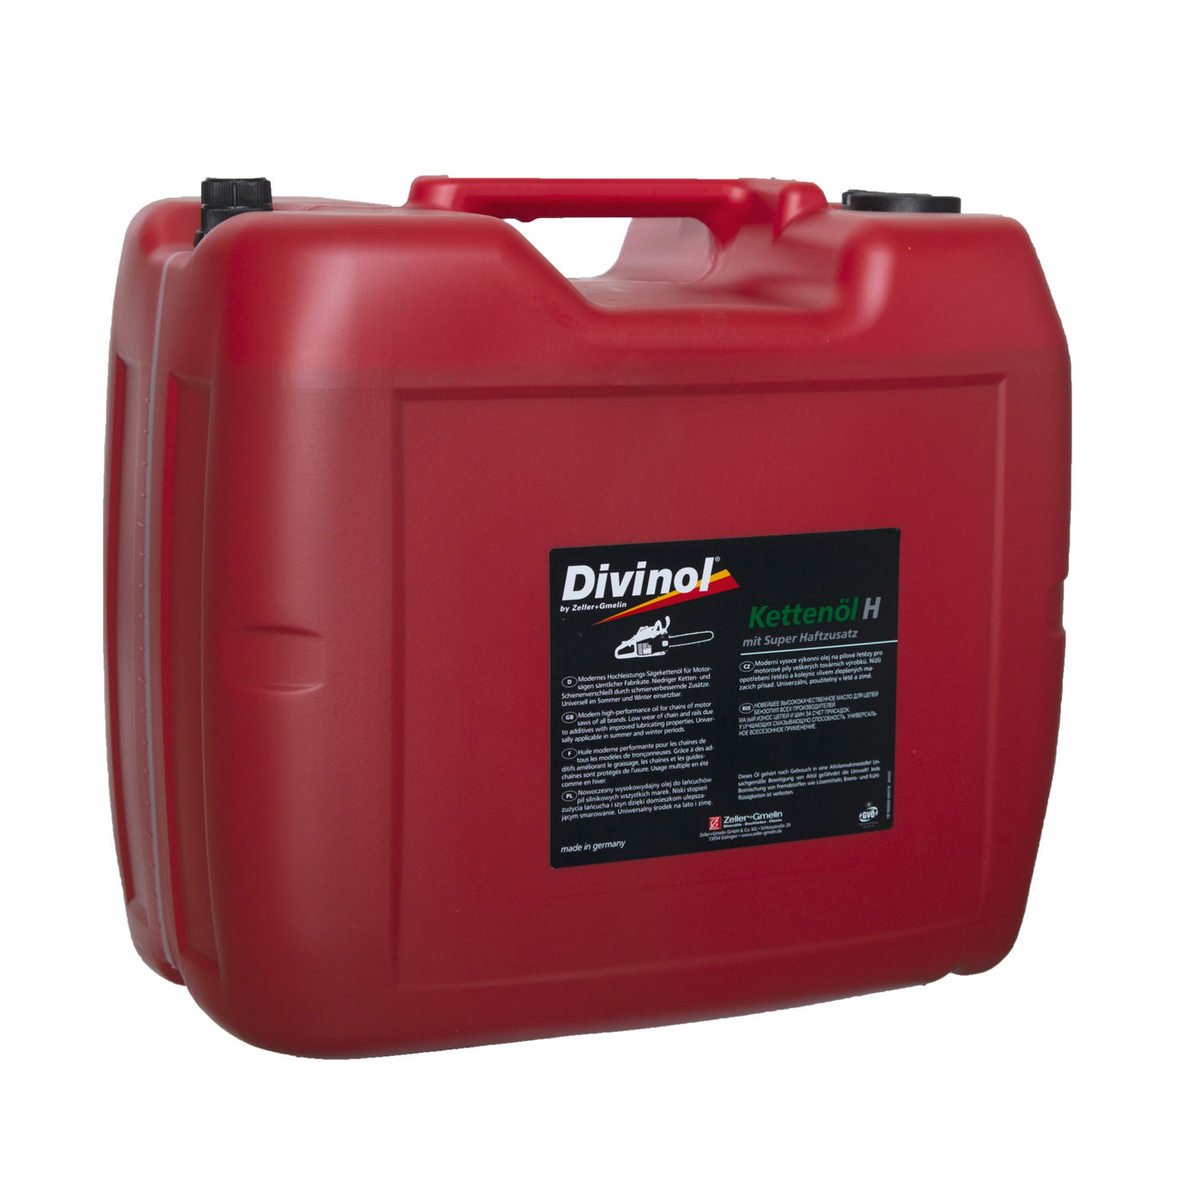 Divinol Kettenöl H 1x20 Liter Sägekettenöl Haftöl Sägekettenhaftöl von Divinol